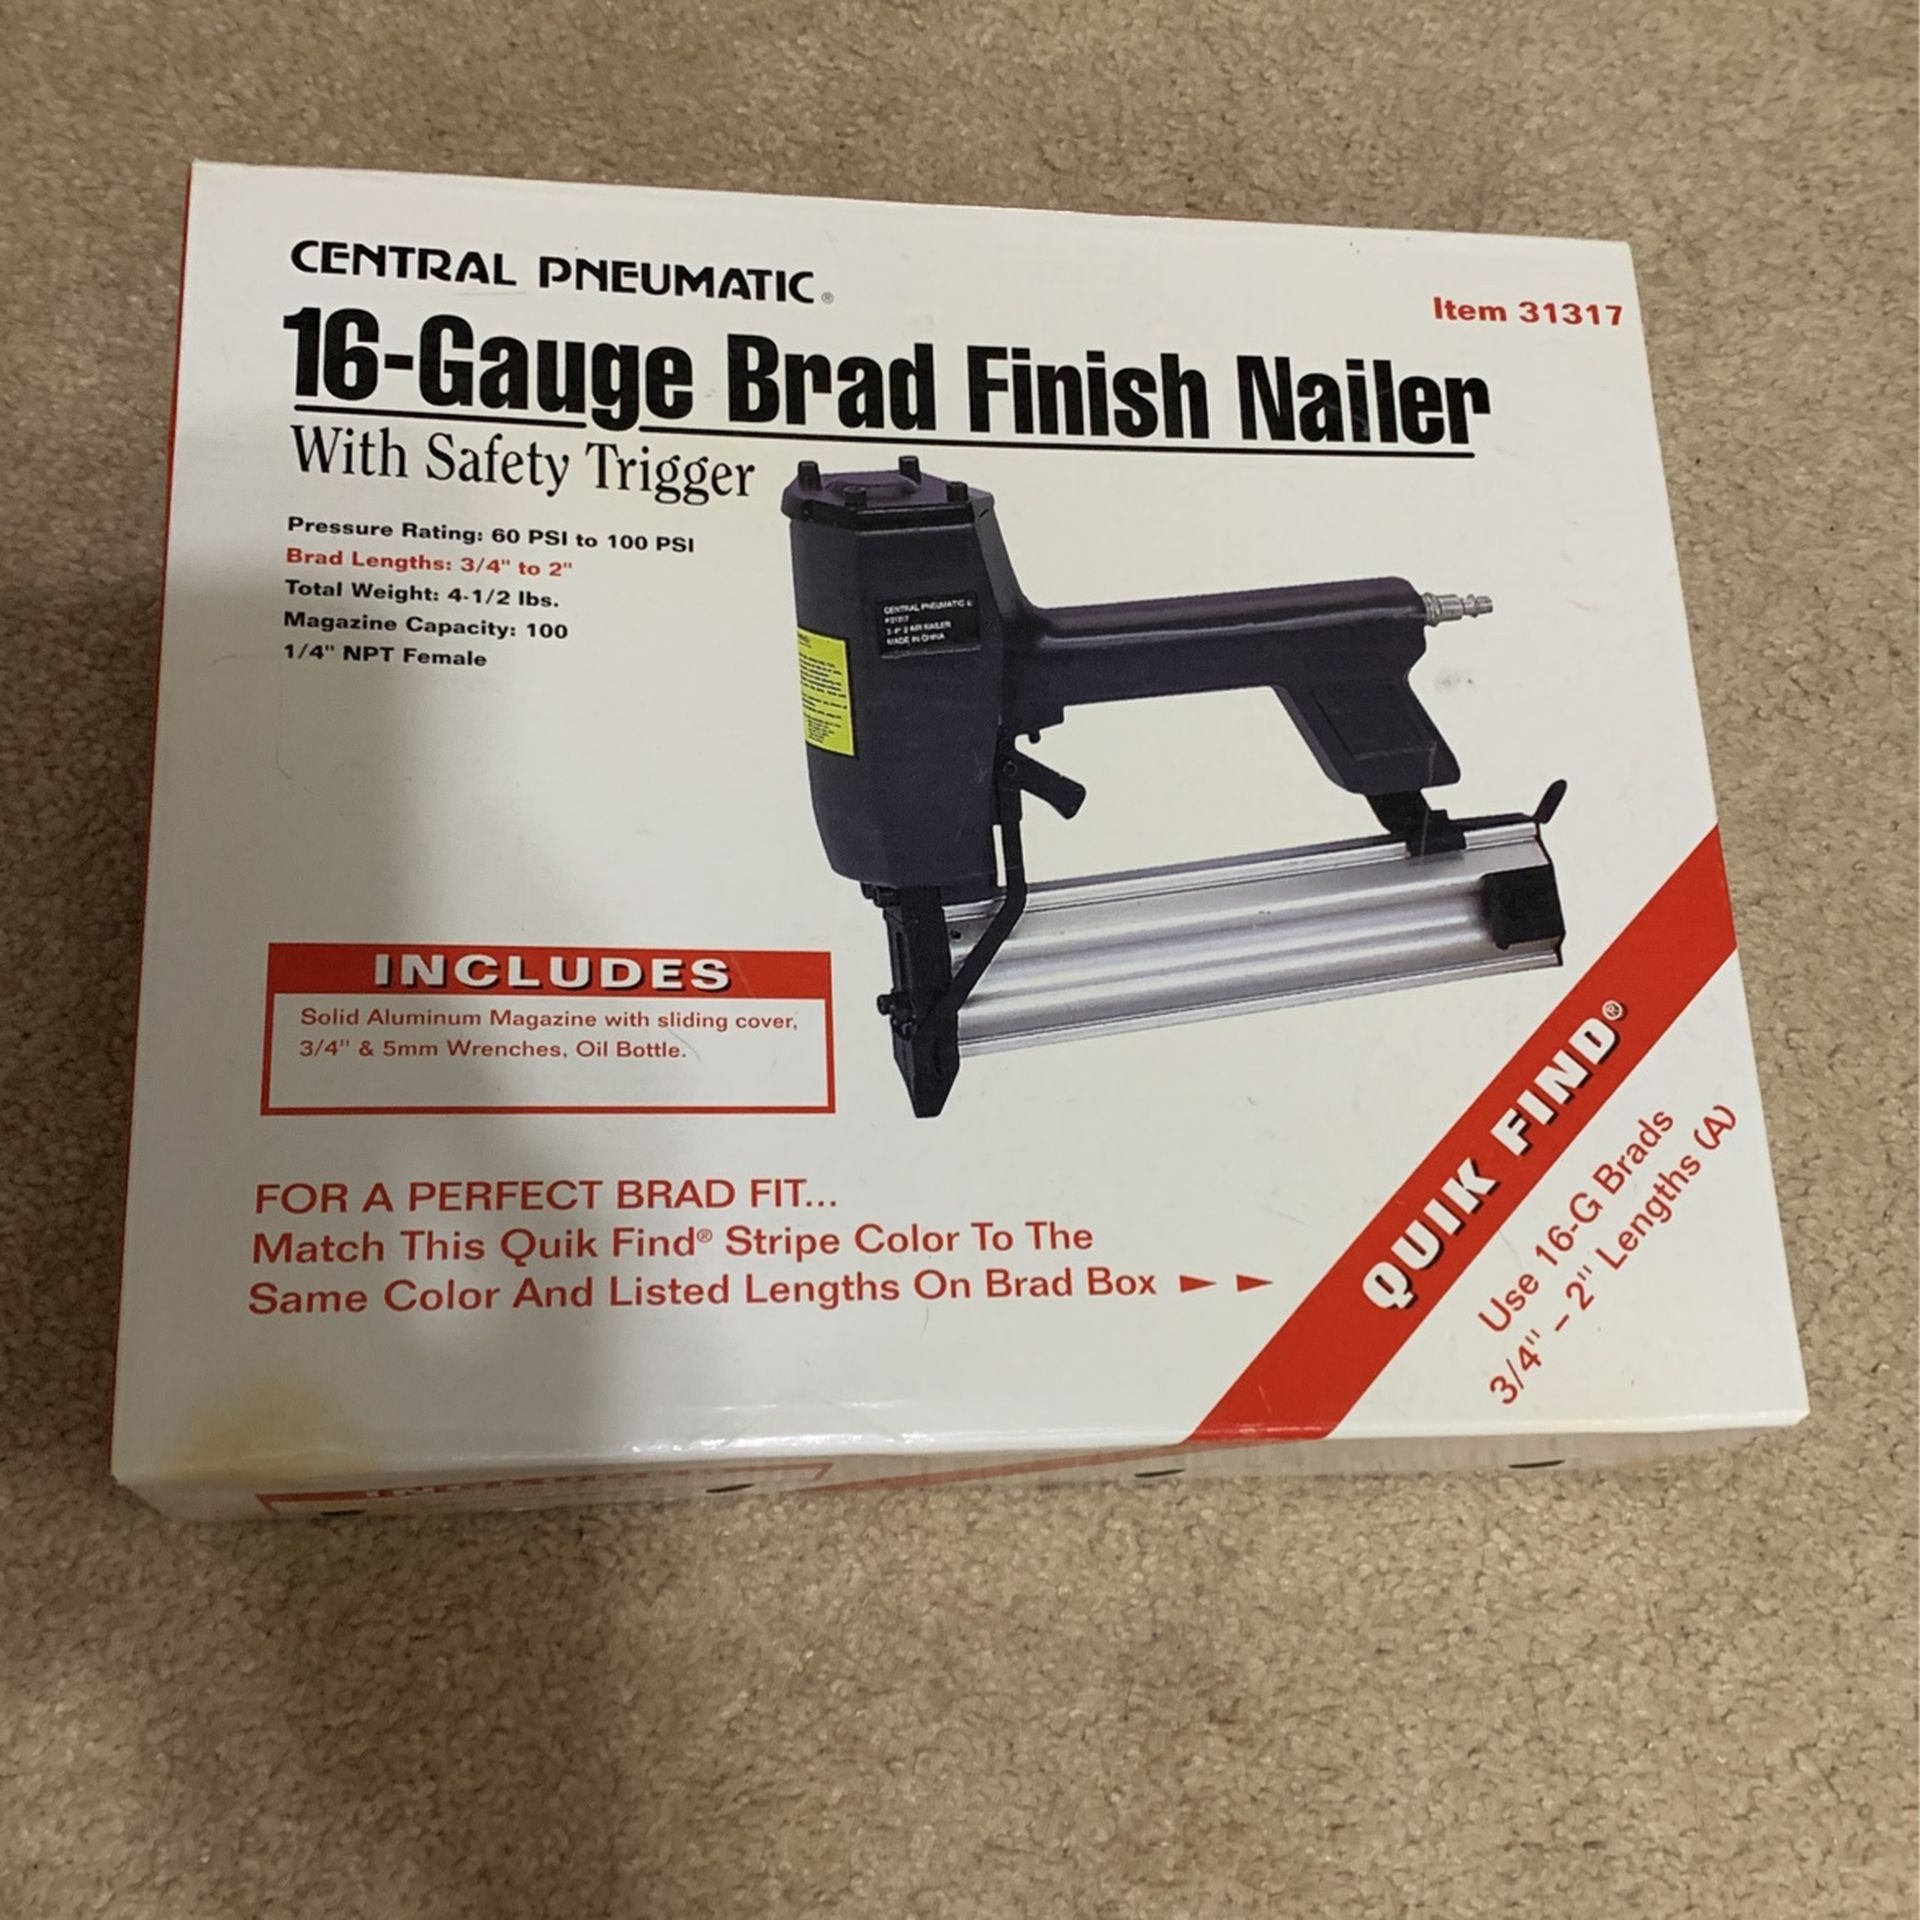 16 Gauge Brad Finish Nailer AND 2500 1 3/4” Brads